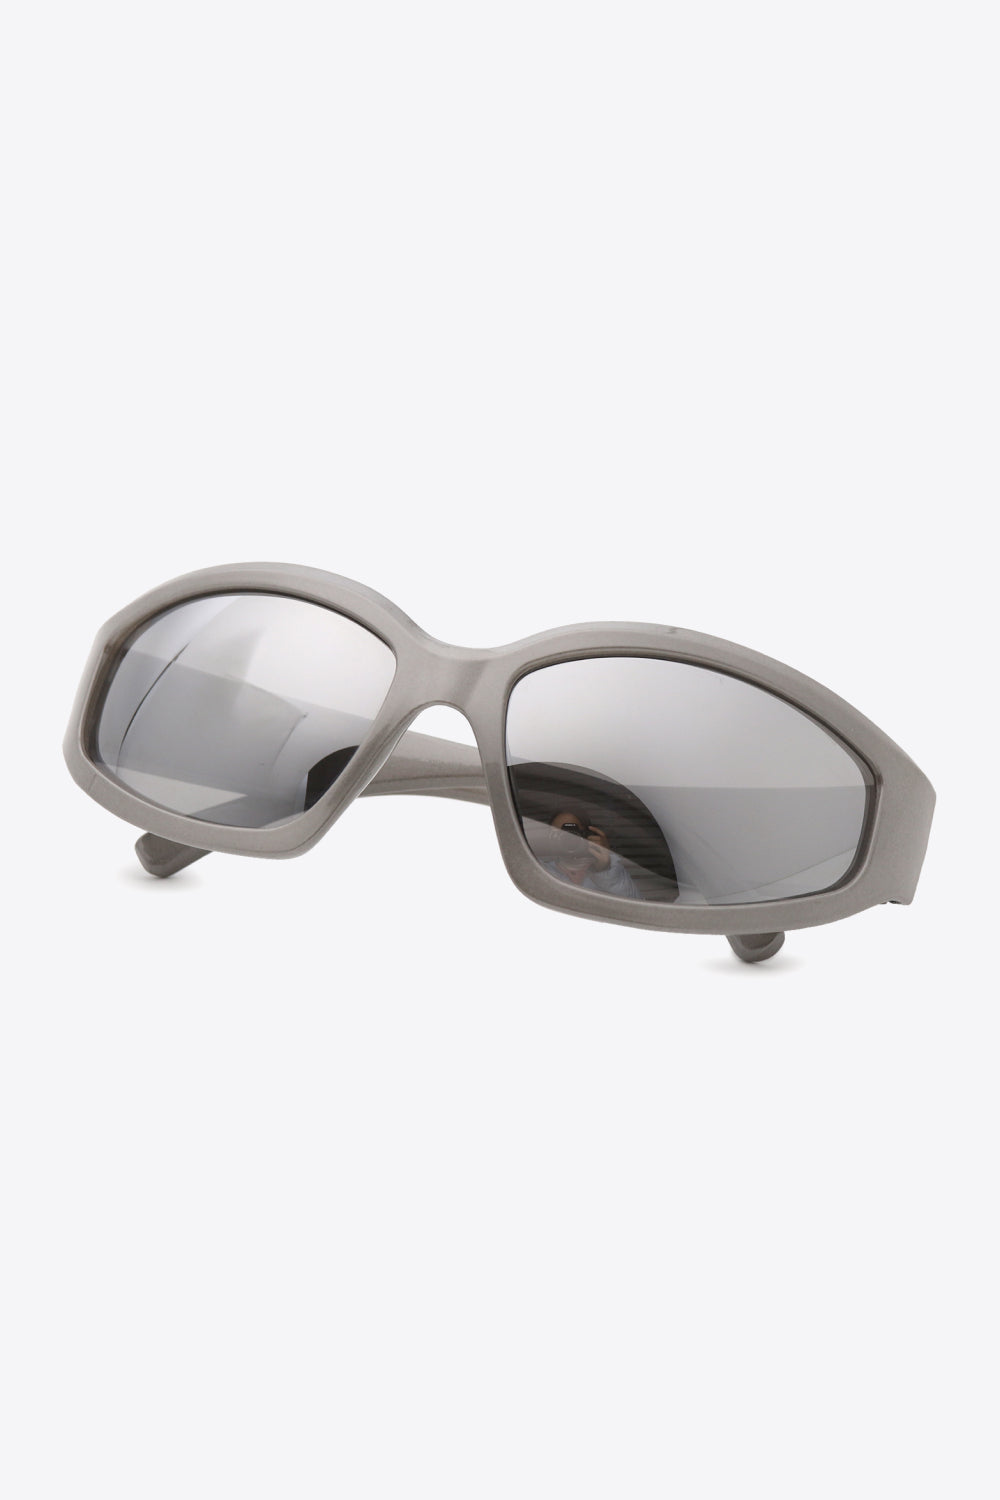 UV400 Polycarbonate Cat-Eye Sunglasses - Sunglasses - FITGGINS